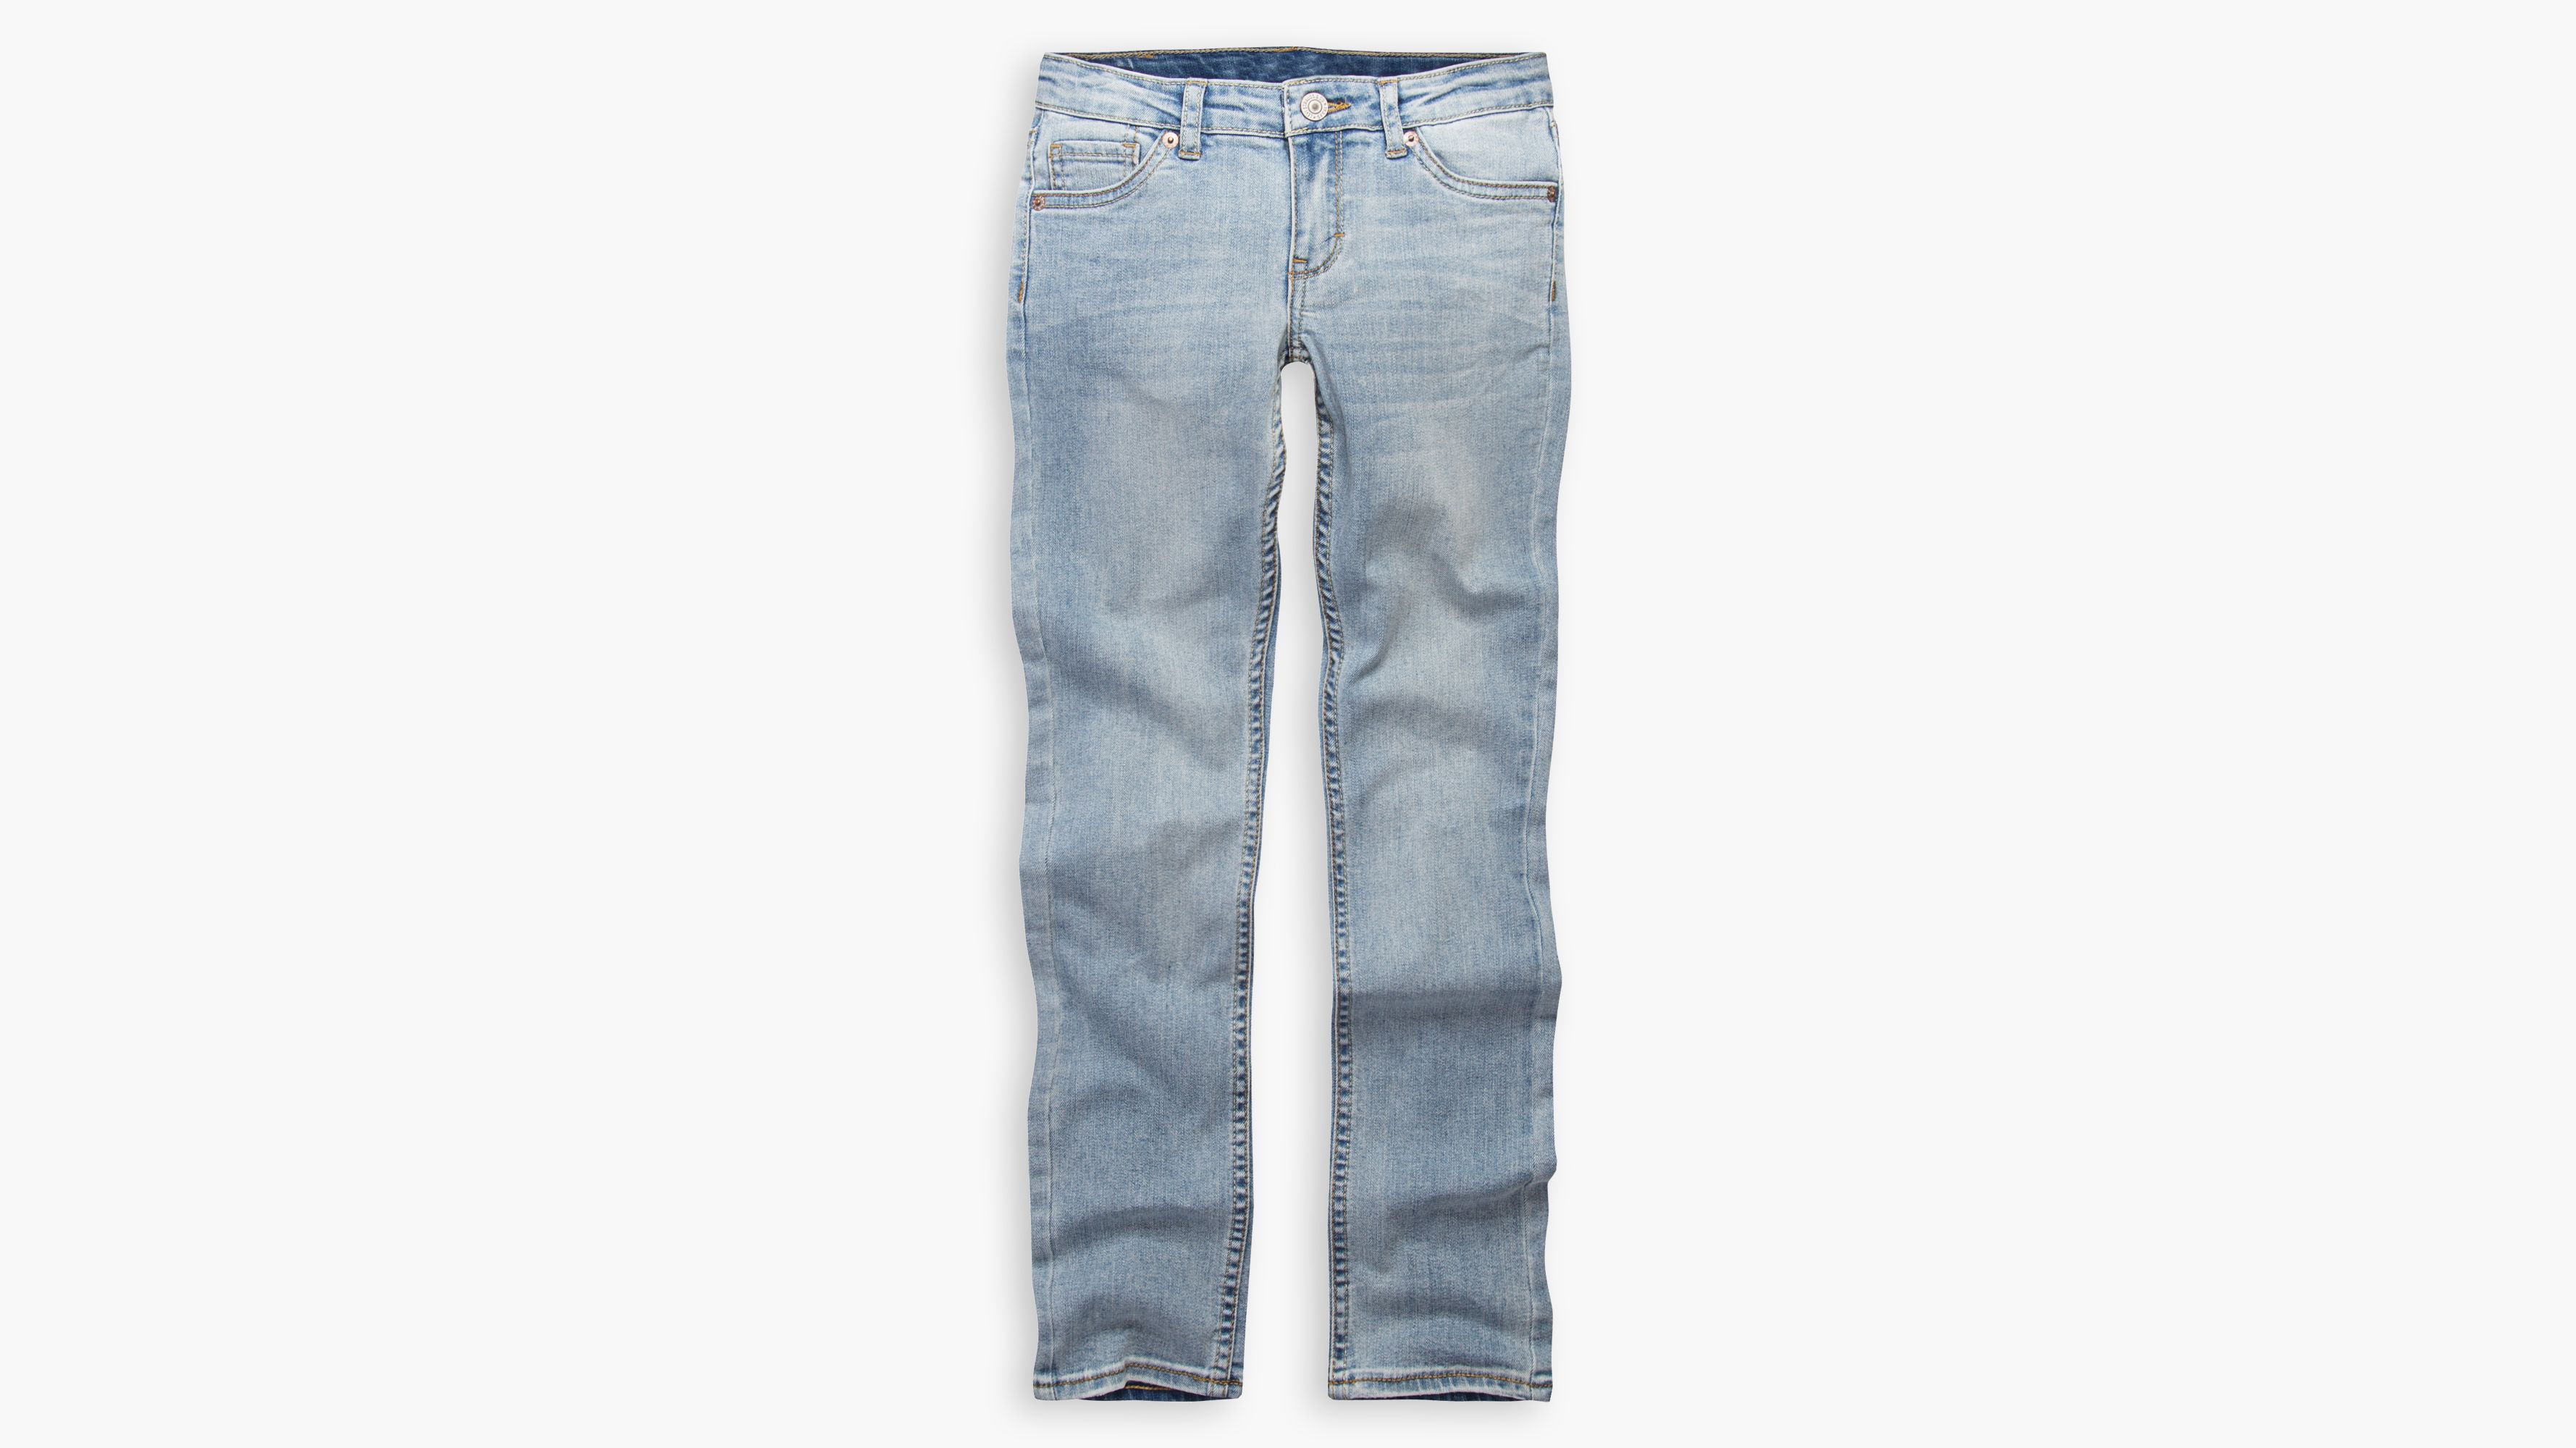 levi's 711 skinny grey jeans